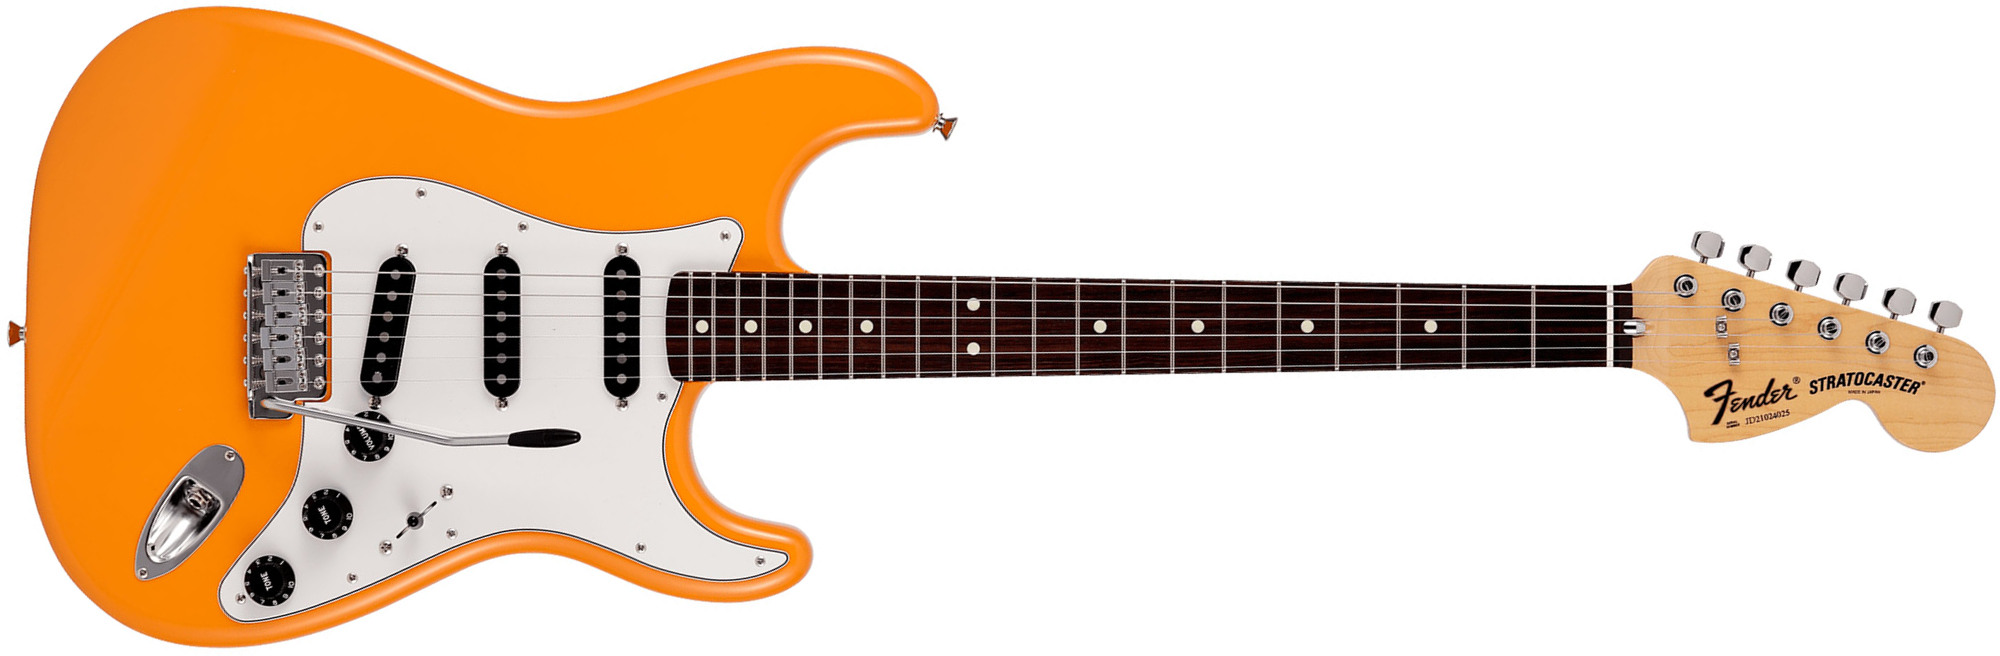 Fender Strat International Color Ltd Jap 3s Trem Rw - Capri Orange - Guitarra eléctrica con forma de str. - Main picture